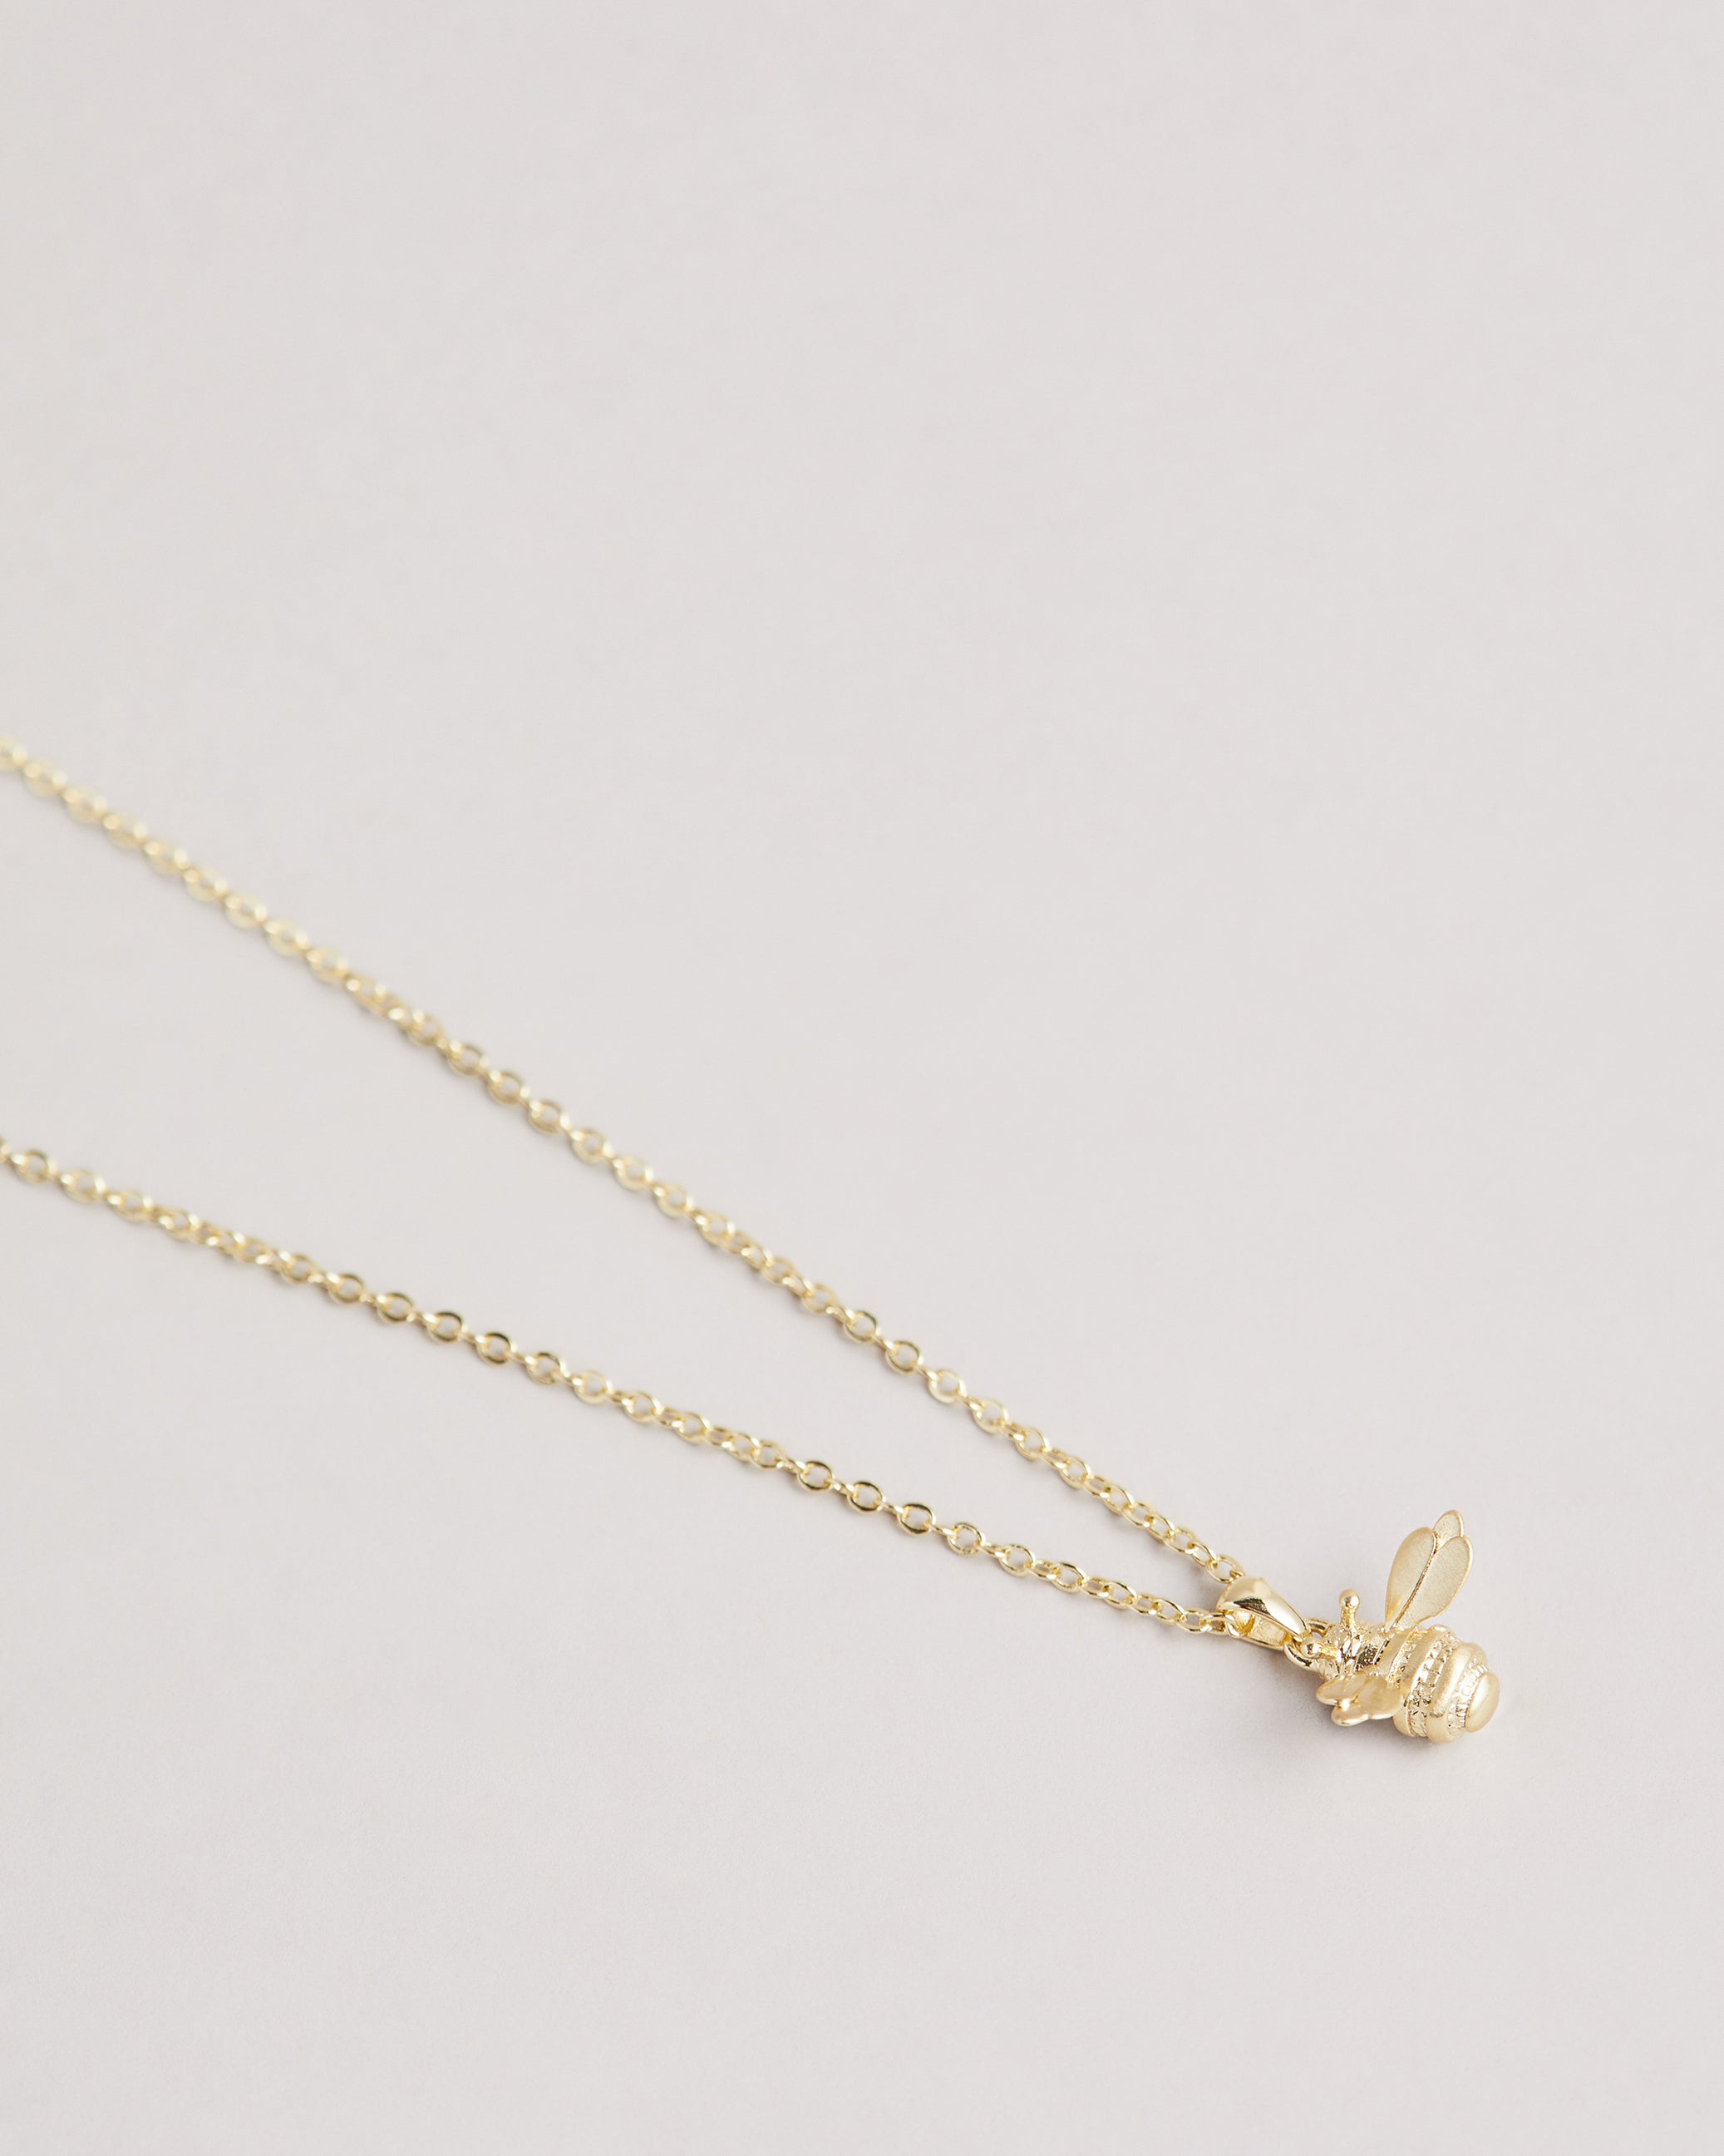 Ted Baker Hannela Crystal Heart Pendant Necklace, Silver